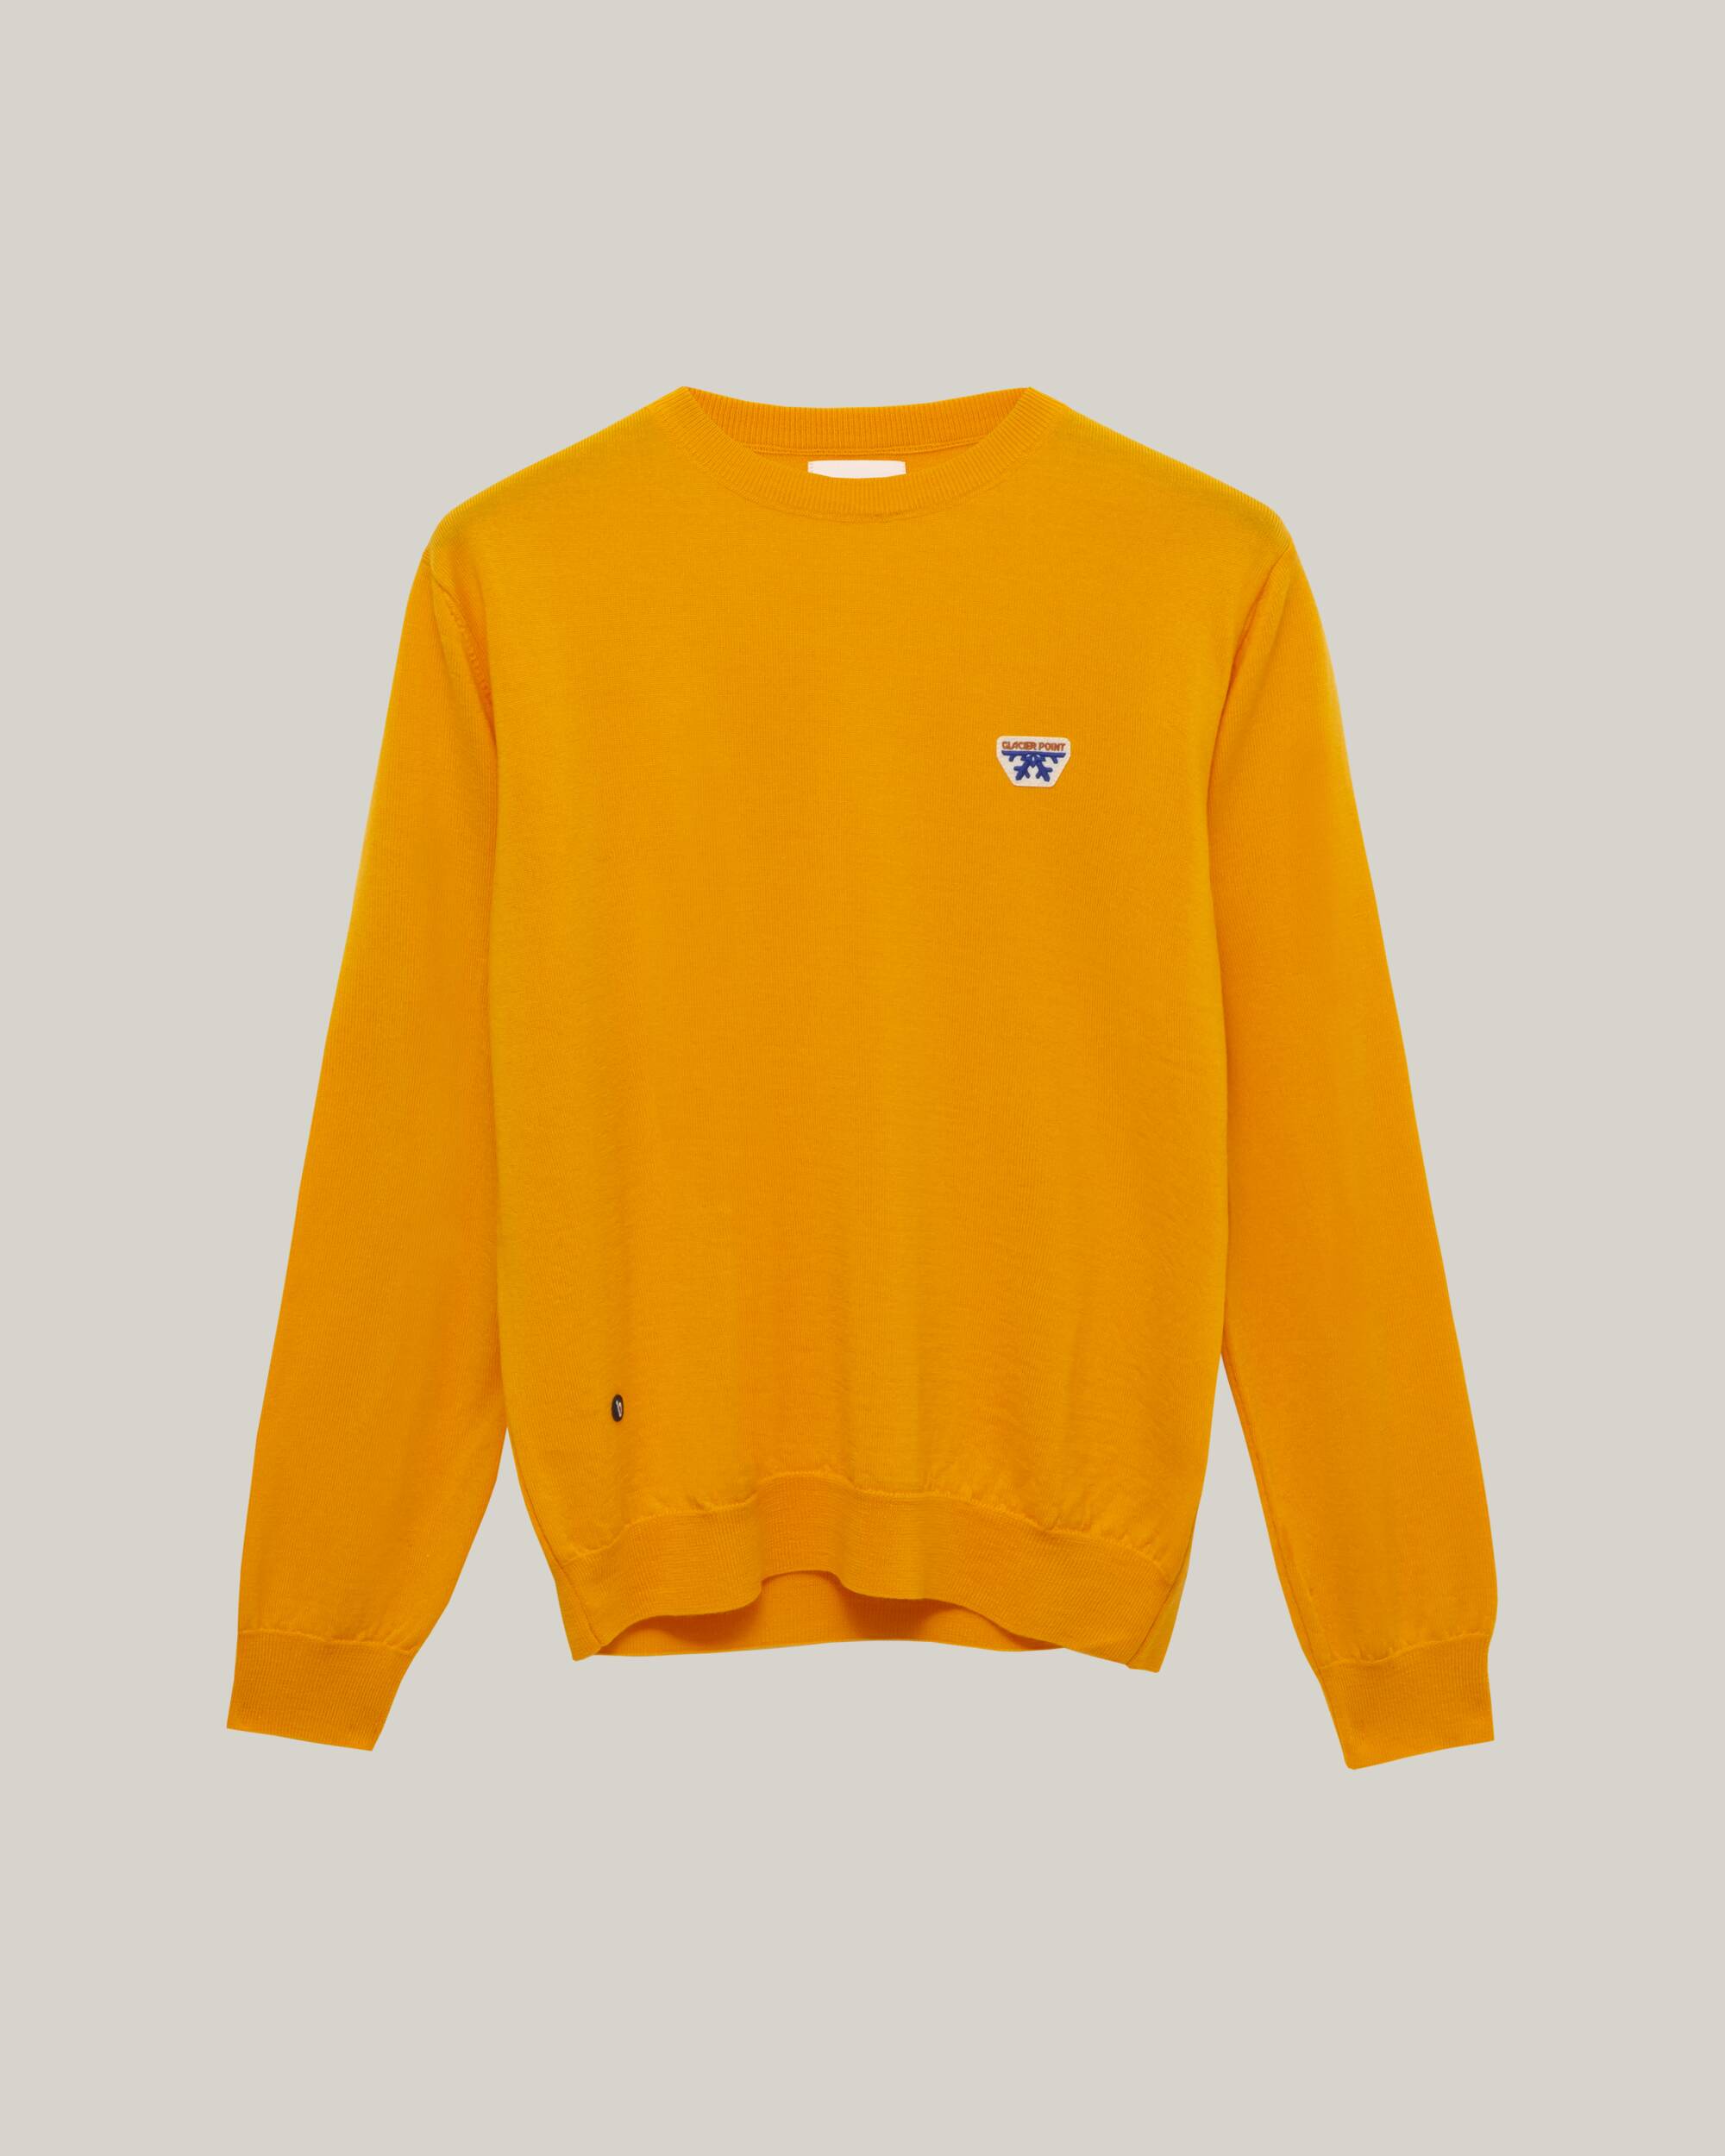 Sweater "Glacier Point" in Saffron - Yellow made from 100% Merino wool by Brava Fabrics